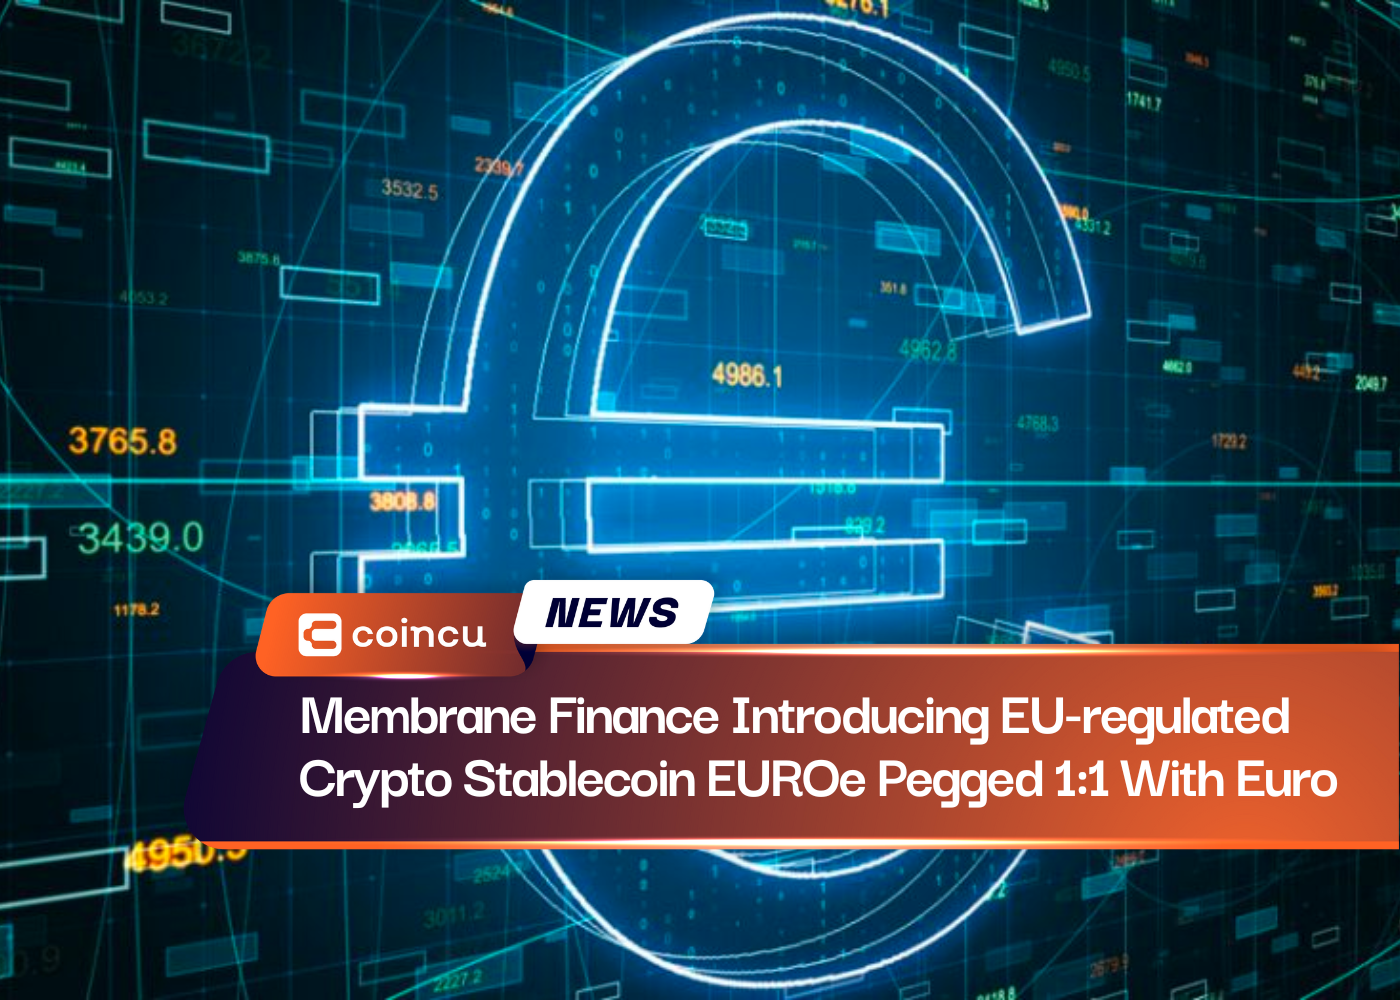 Membrane Finance Introducing EU-regulated Crypto Stablecoin EUROe Pegged 1:1 With Euro